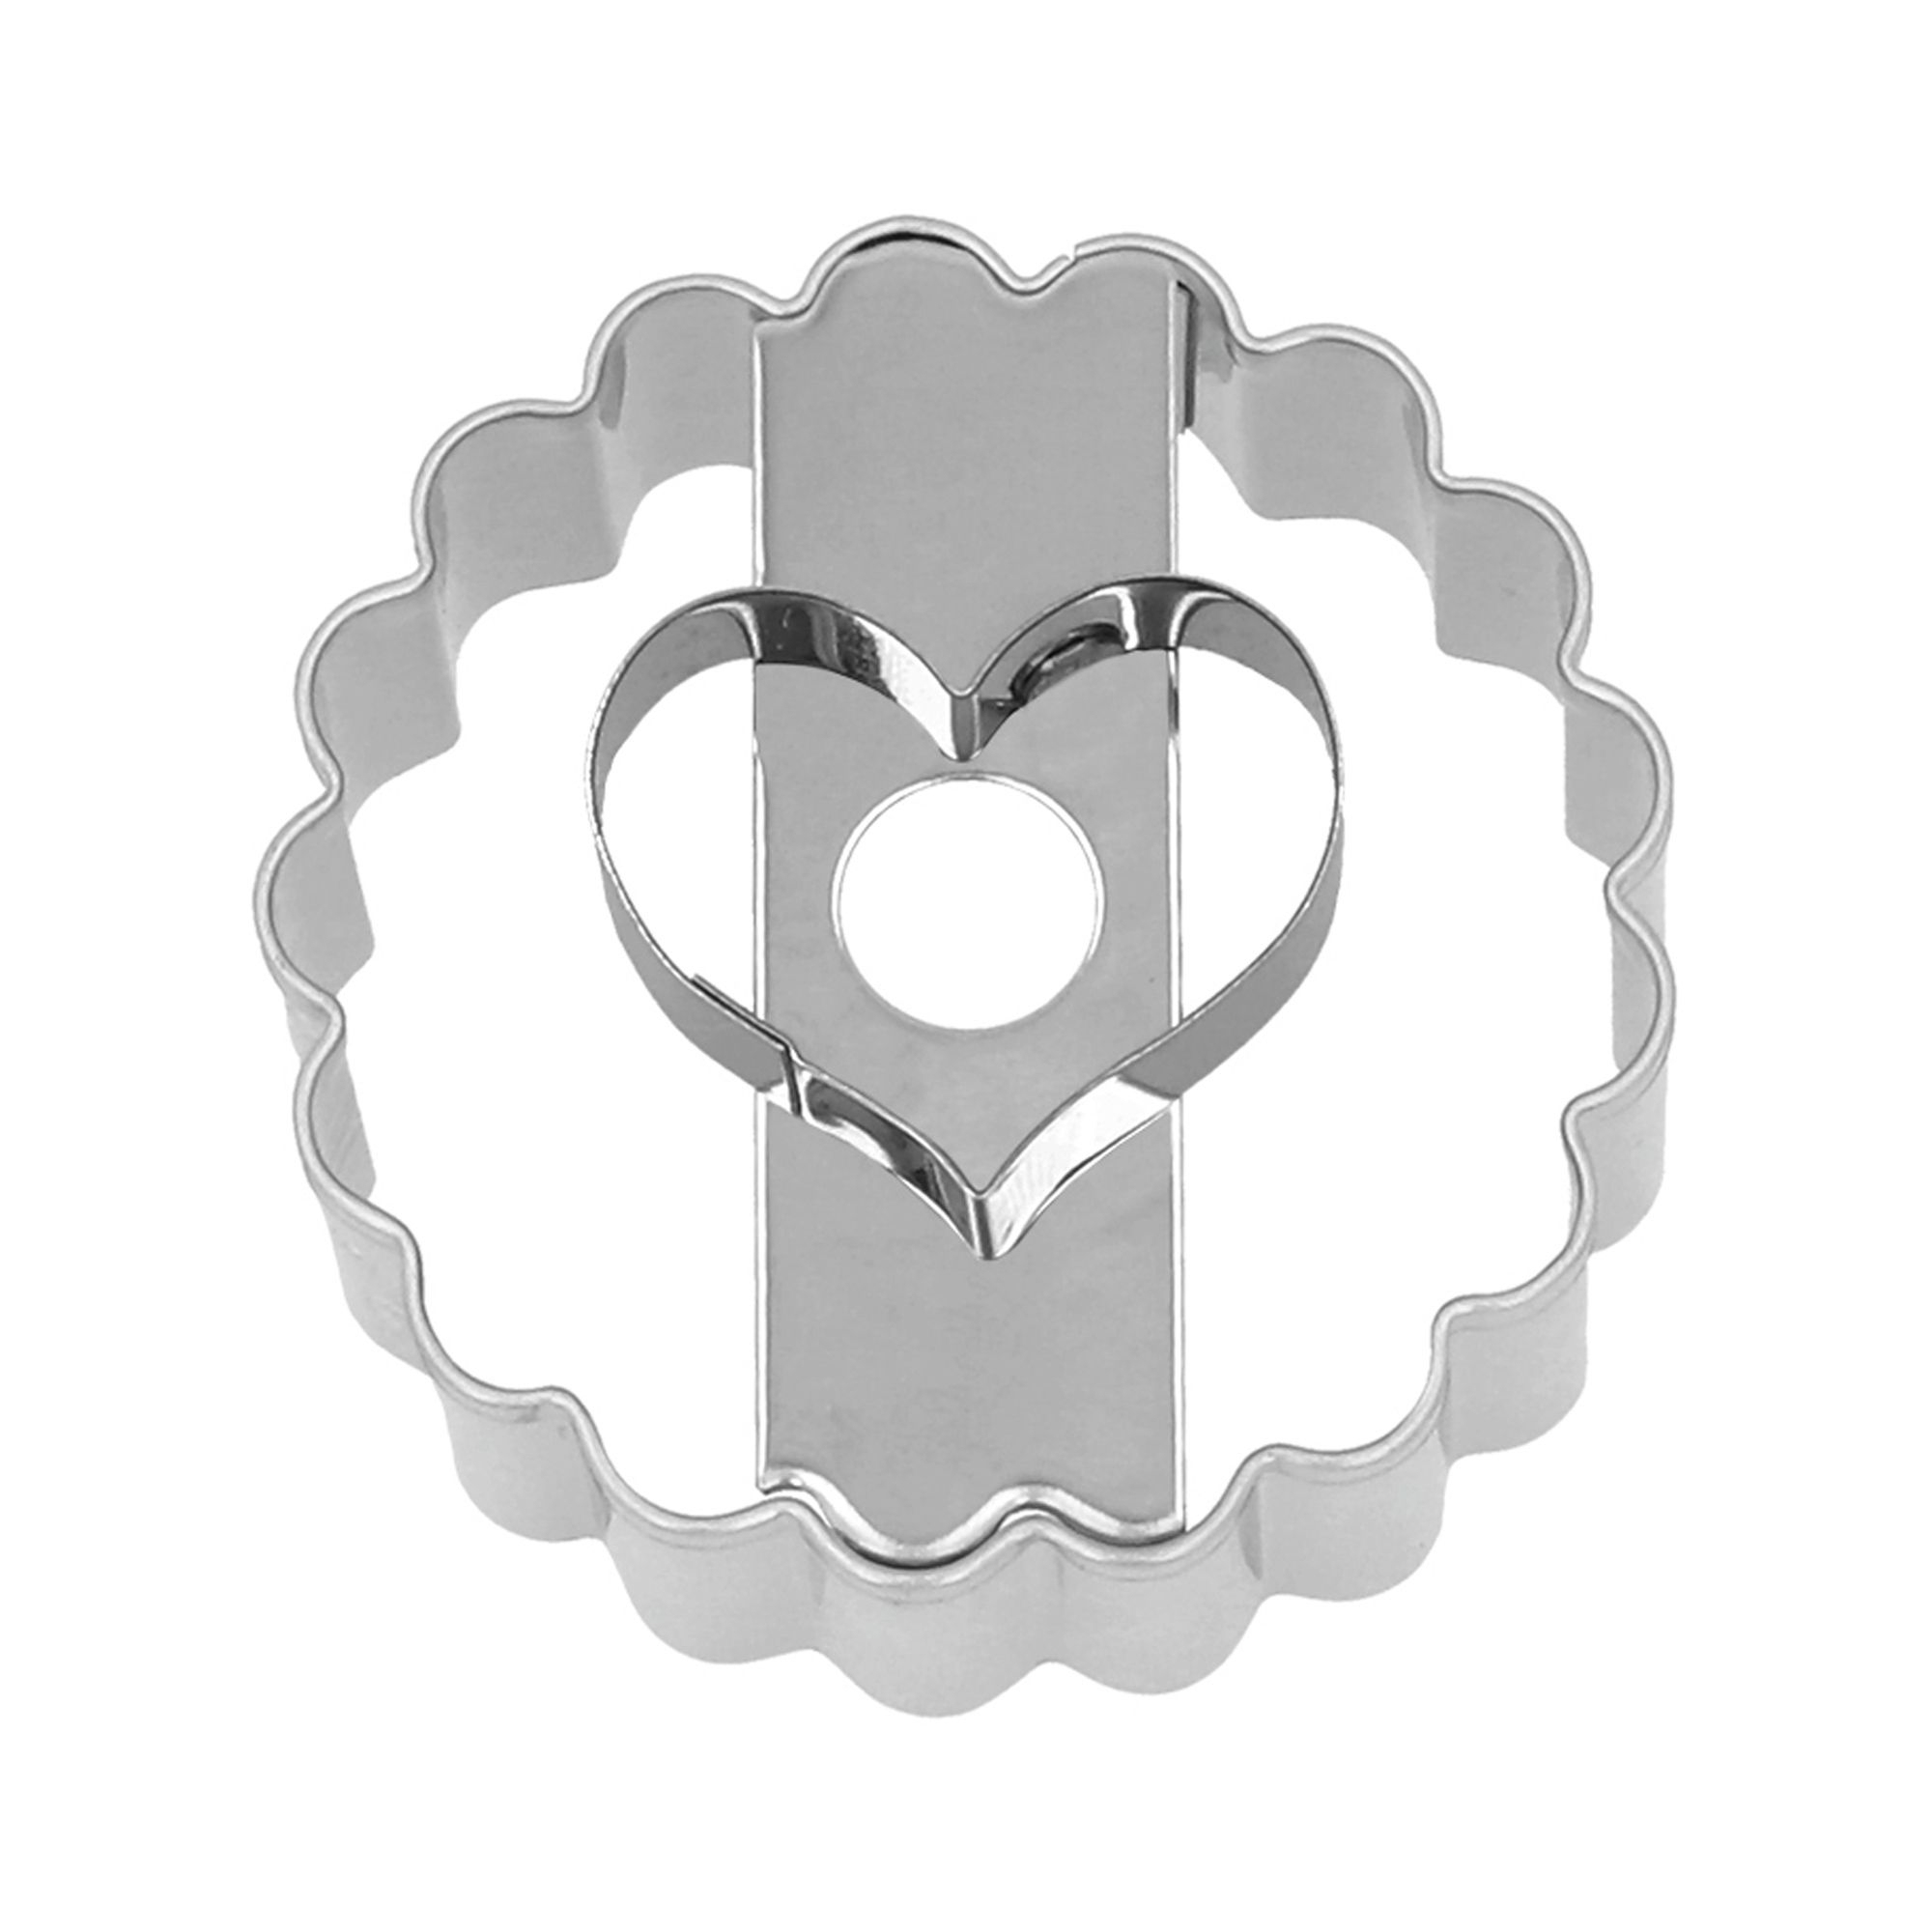 Birkmann - Cookie cutter - linzer heart - 5 cm